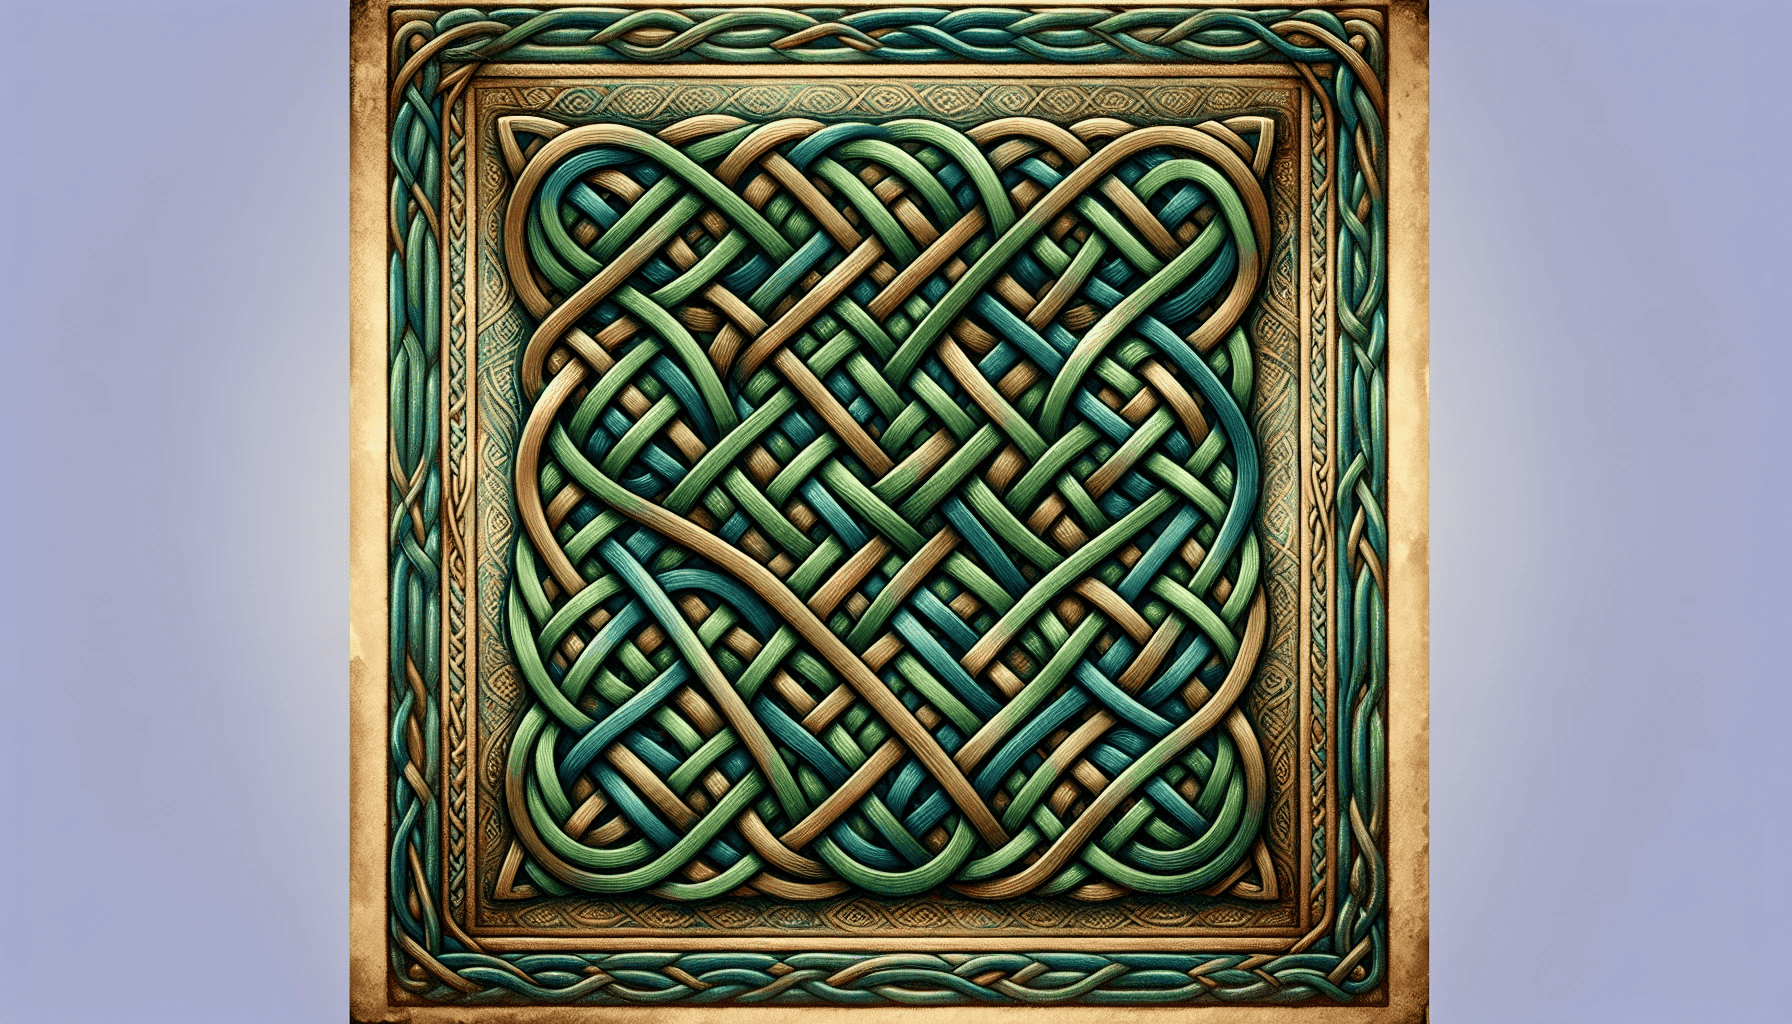 Illustration of intricate Celtic knots